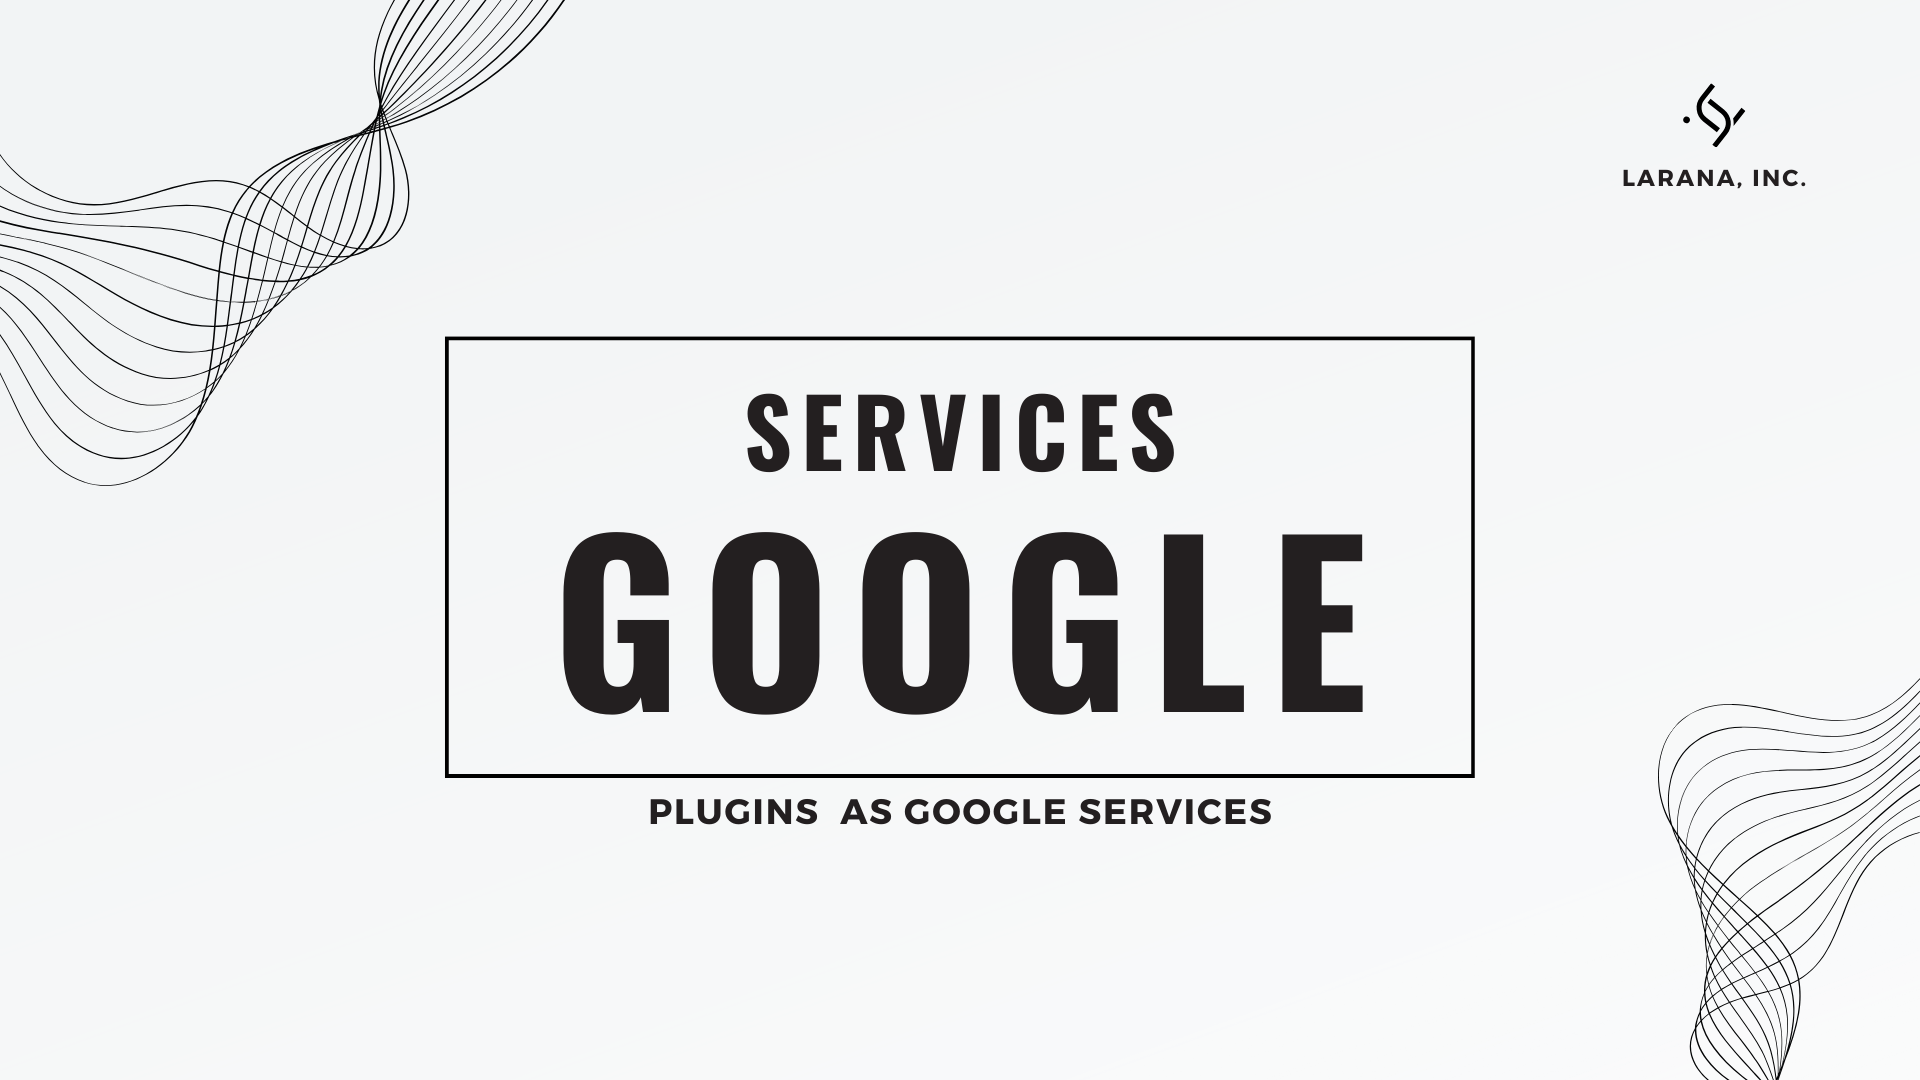 Google services as plugins for WordPress websites